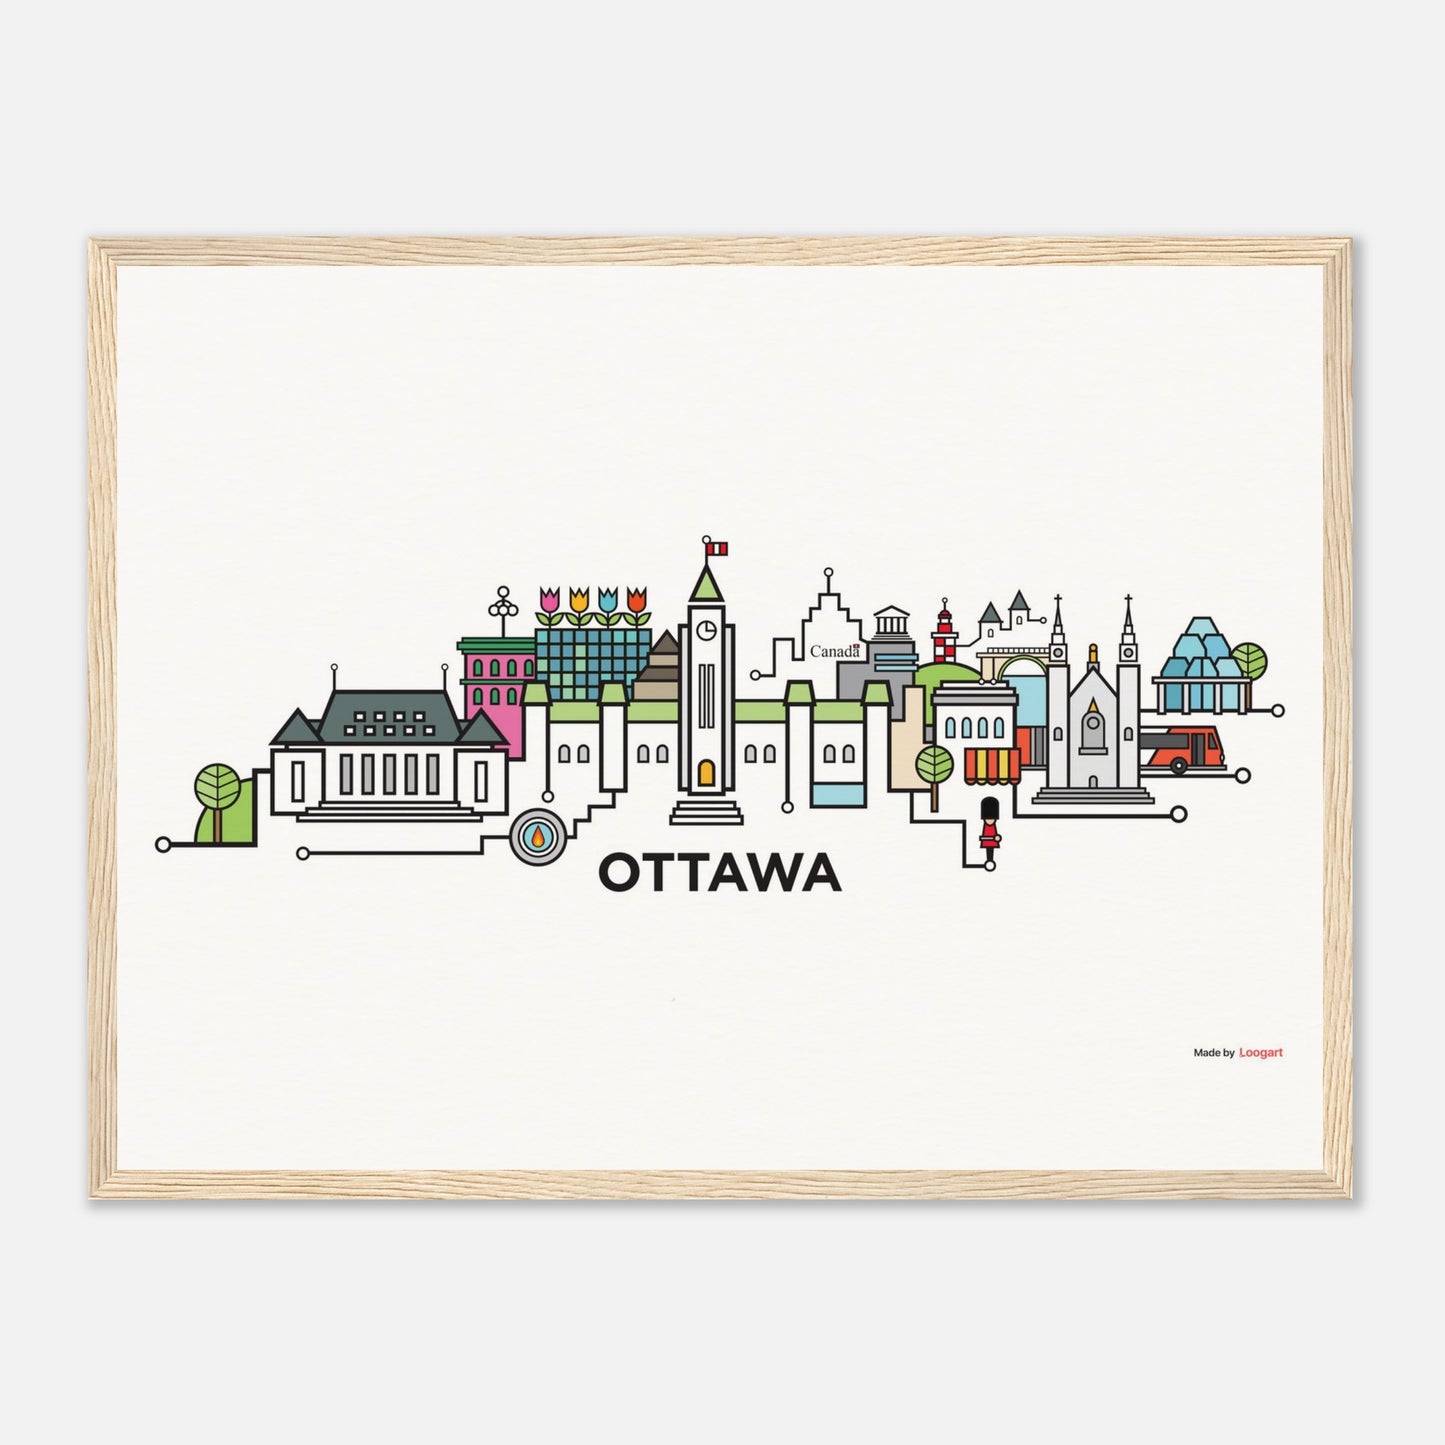 Ottawa CityLine by Loogart